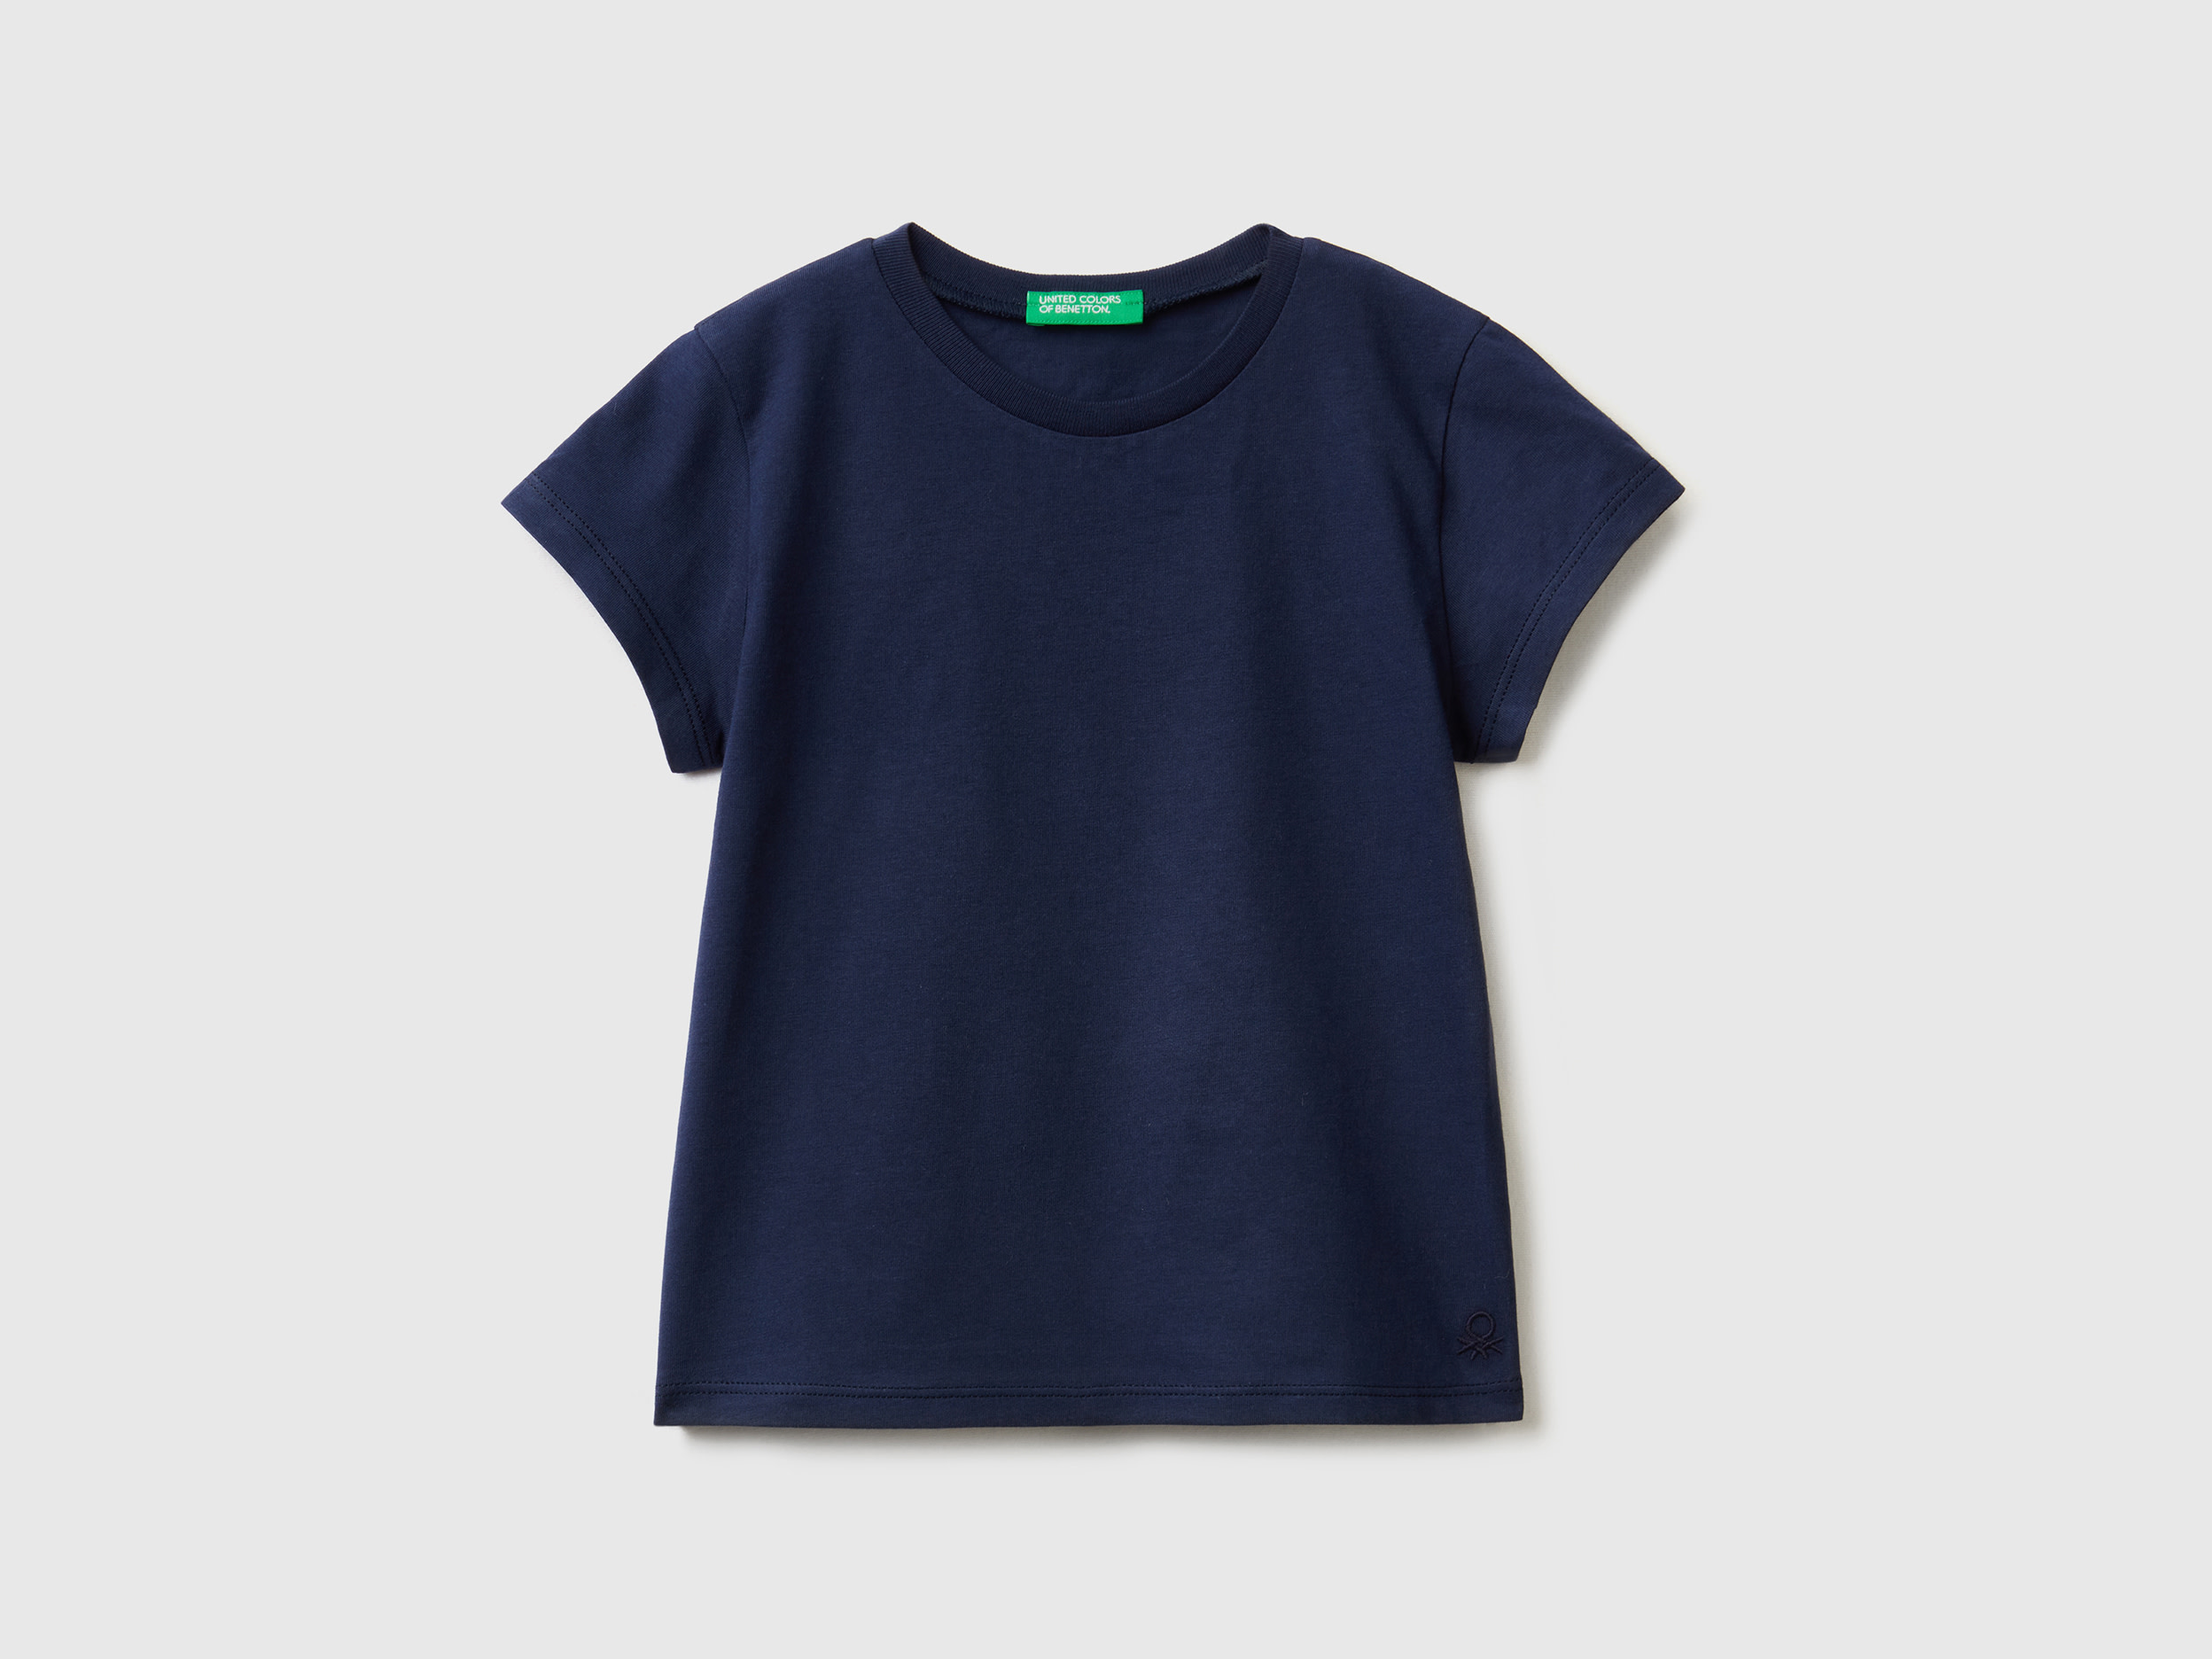 Benetton, 100% Organic Cotton T-shirt, size 3-4, Dark Blue, Kids